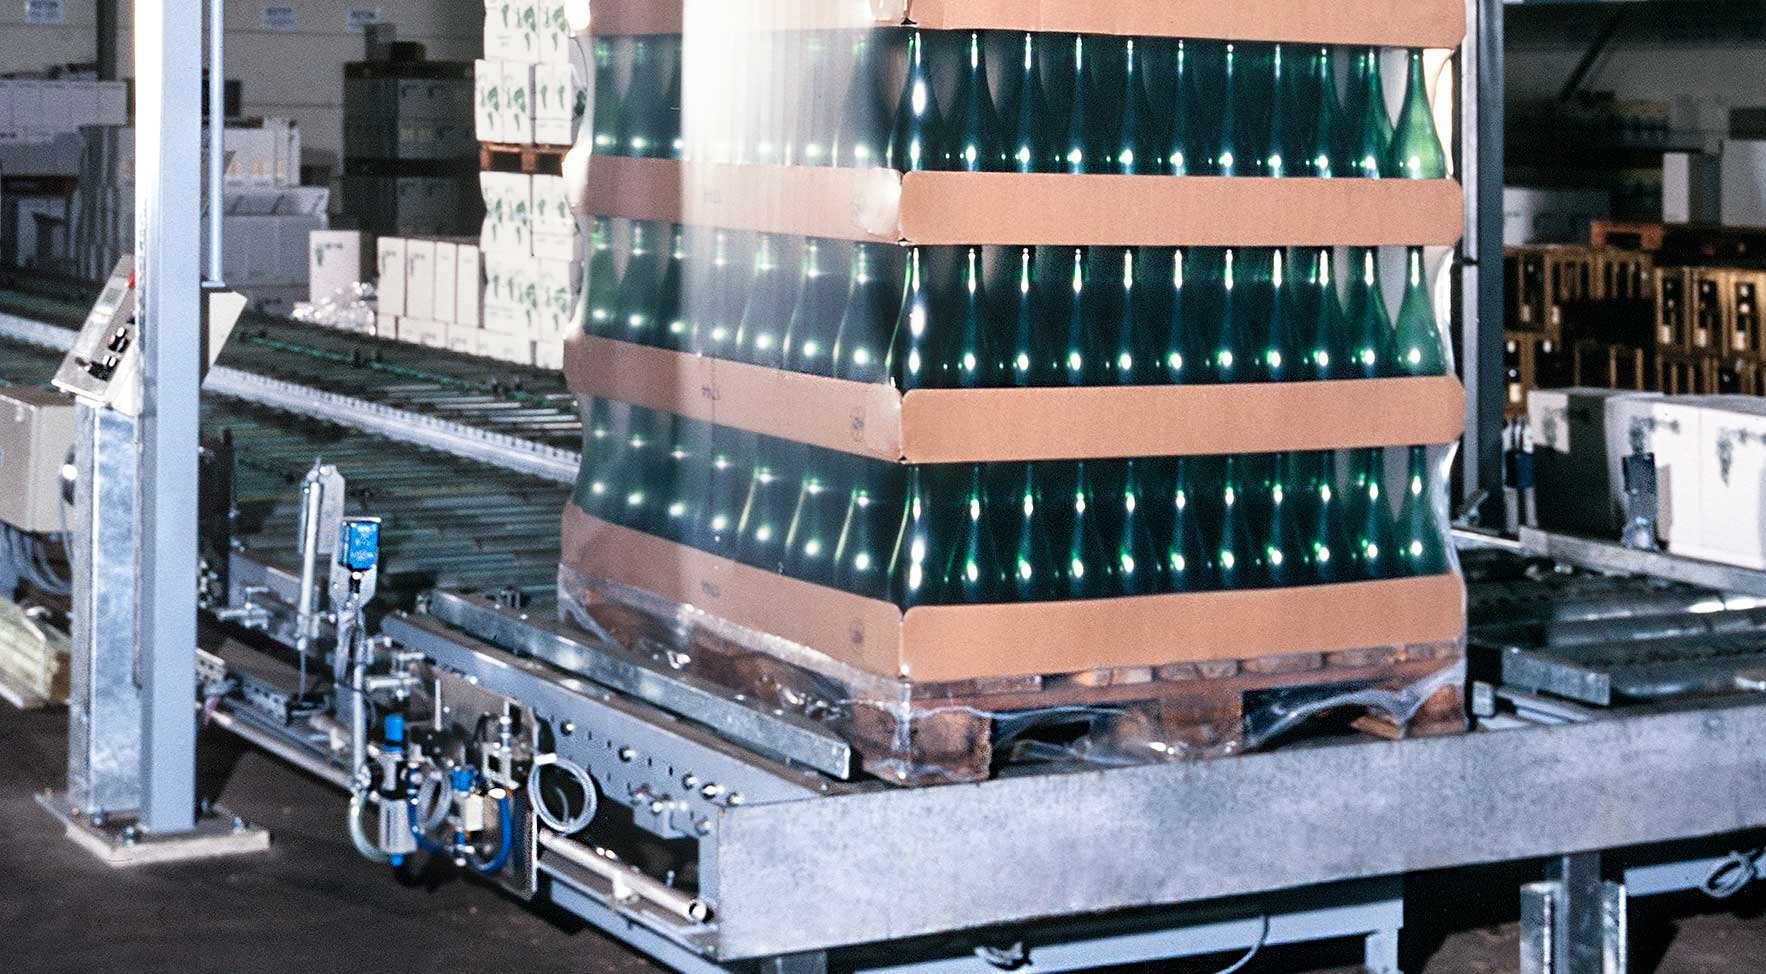 Loading unit with wine bottles on automated conveyor technology, Moselland eG Winzergenossenschaft